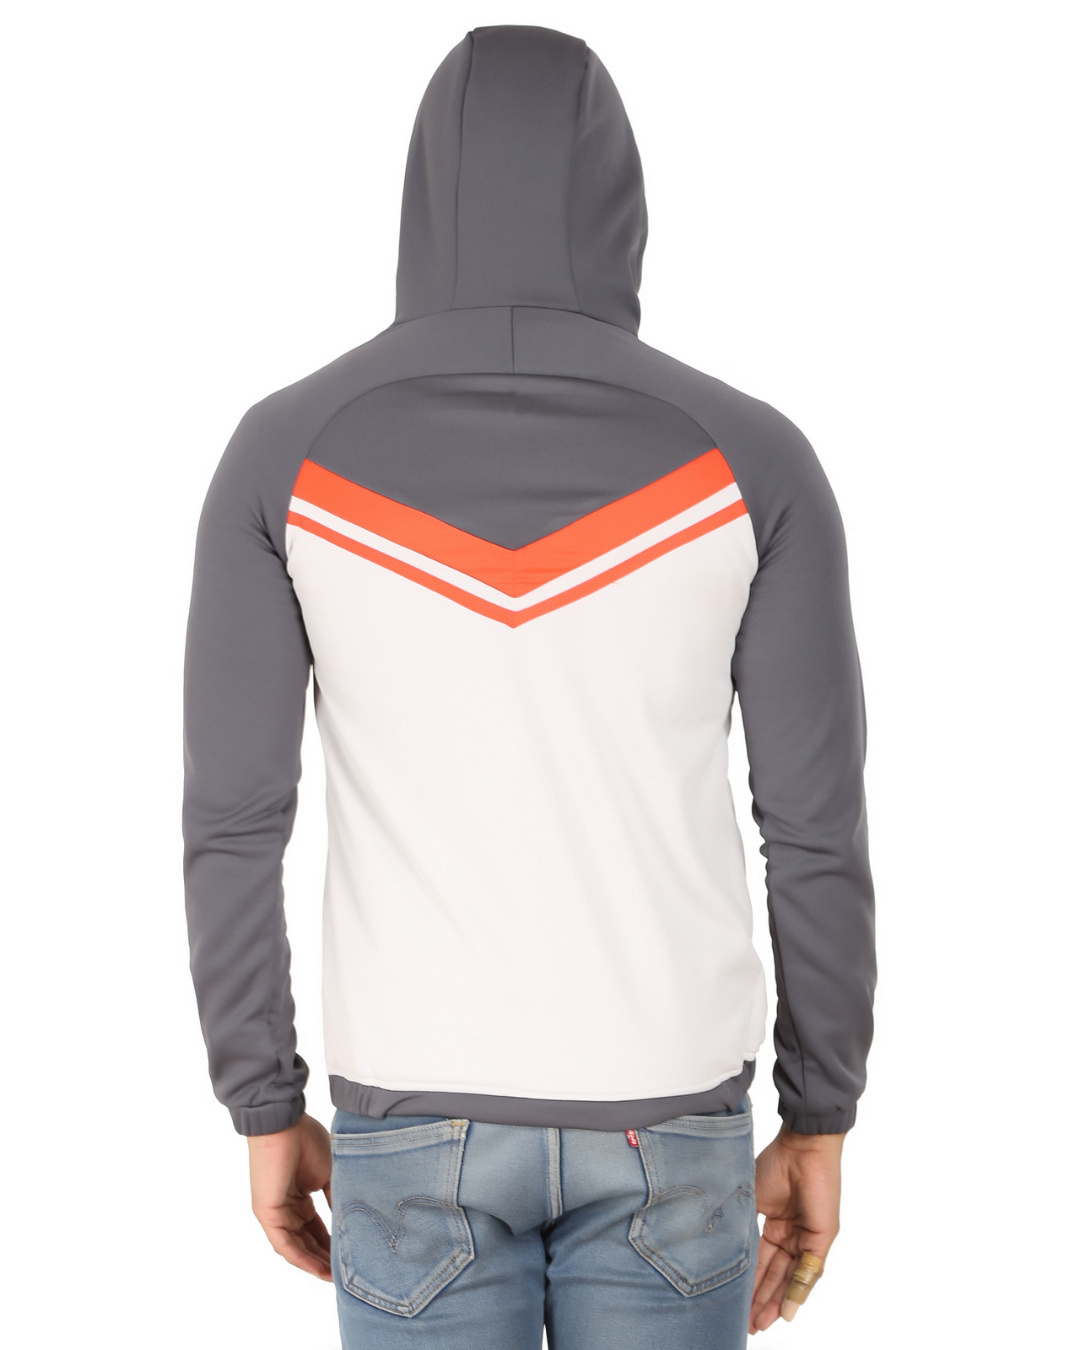 Shop Men's Italian Fleece White & Grey Hoodie Jacket with Orange Contrast-Back